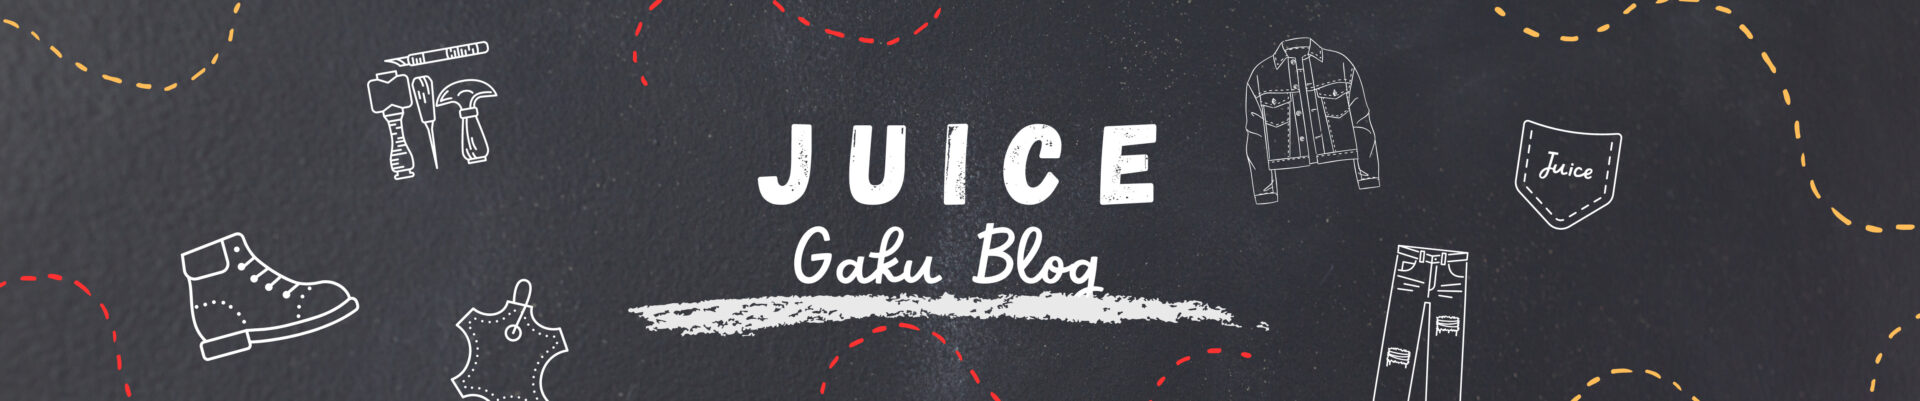 JuiceBlog